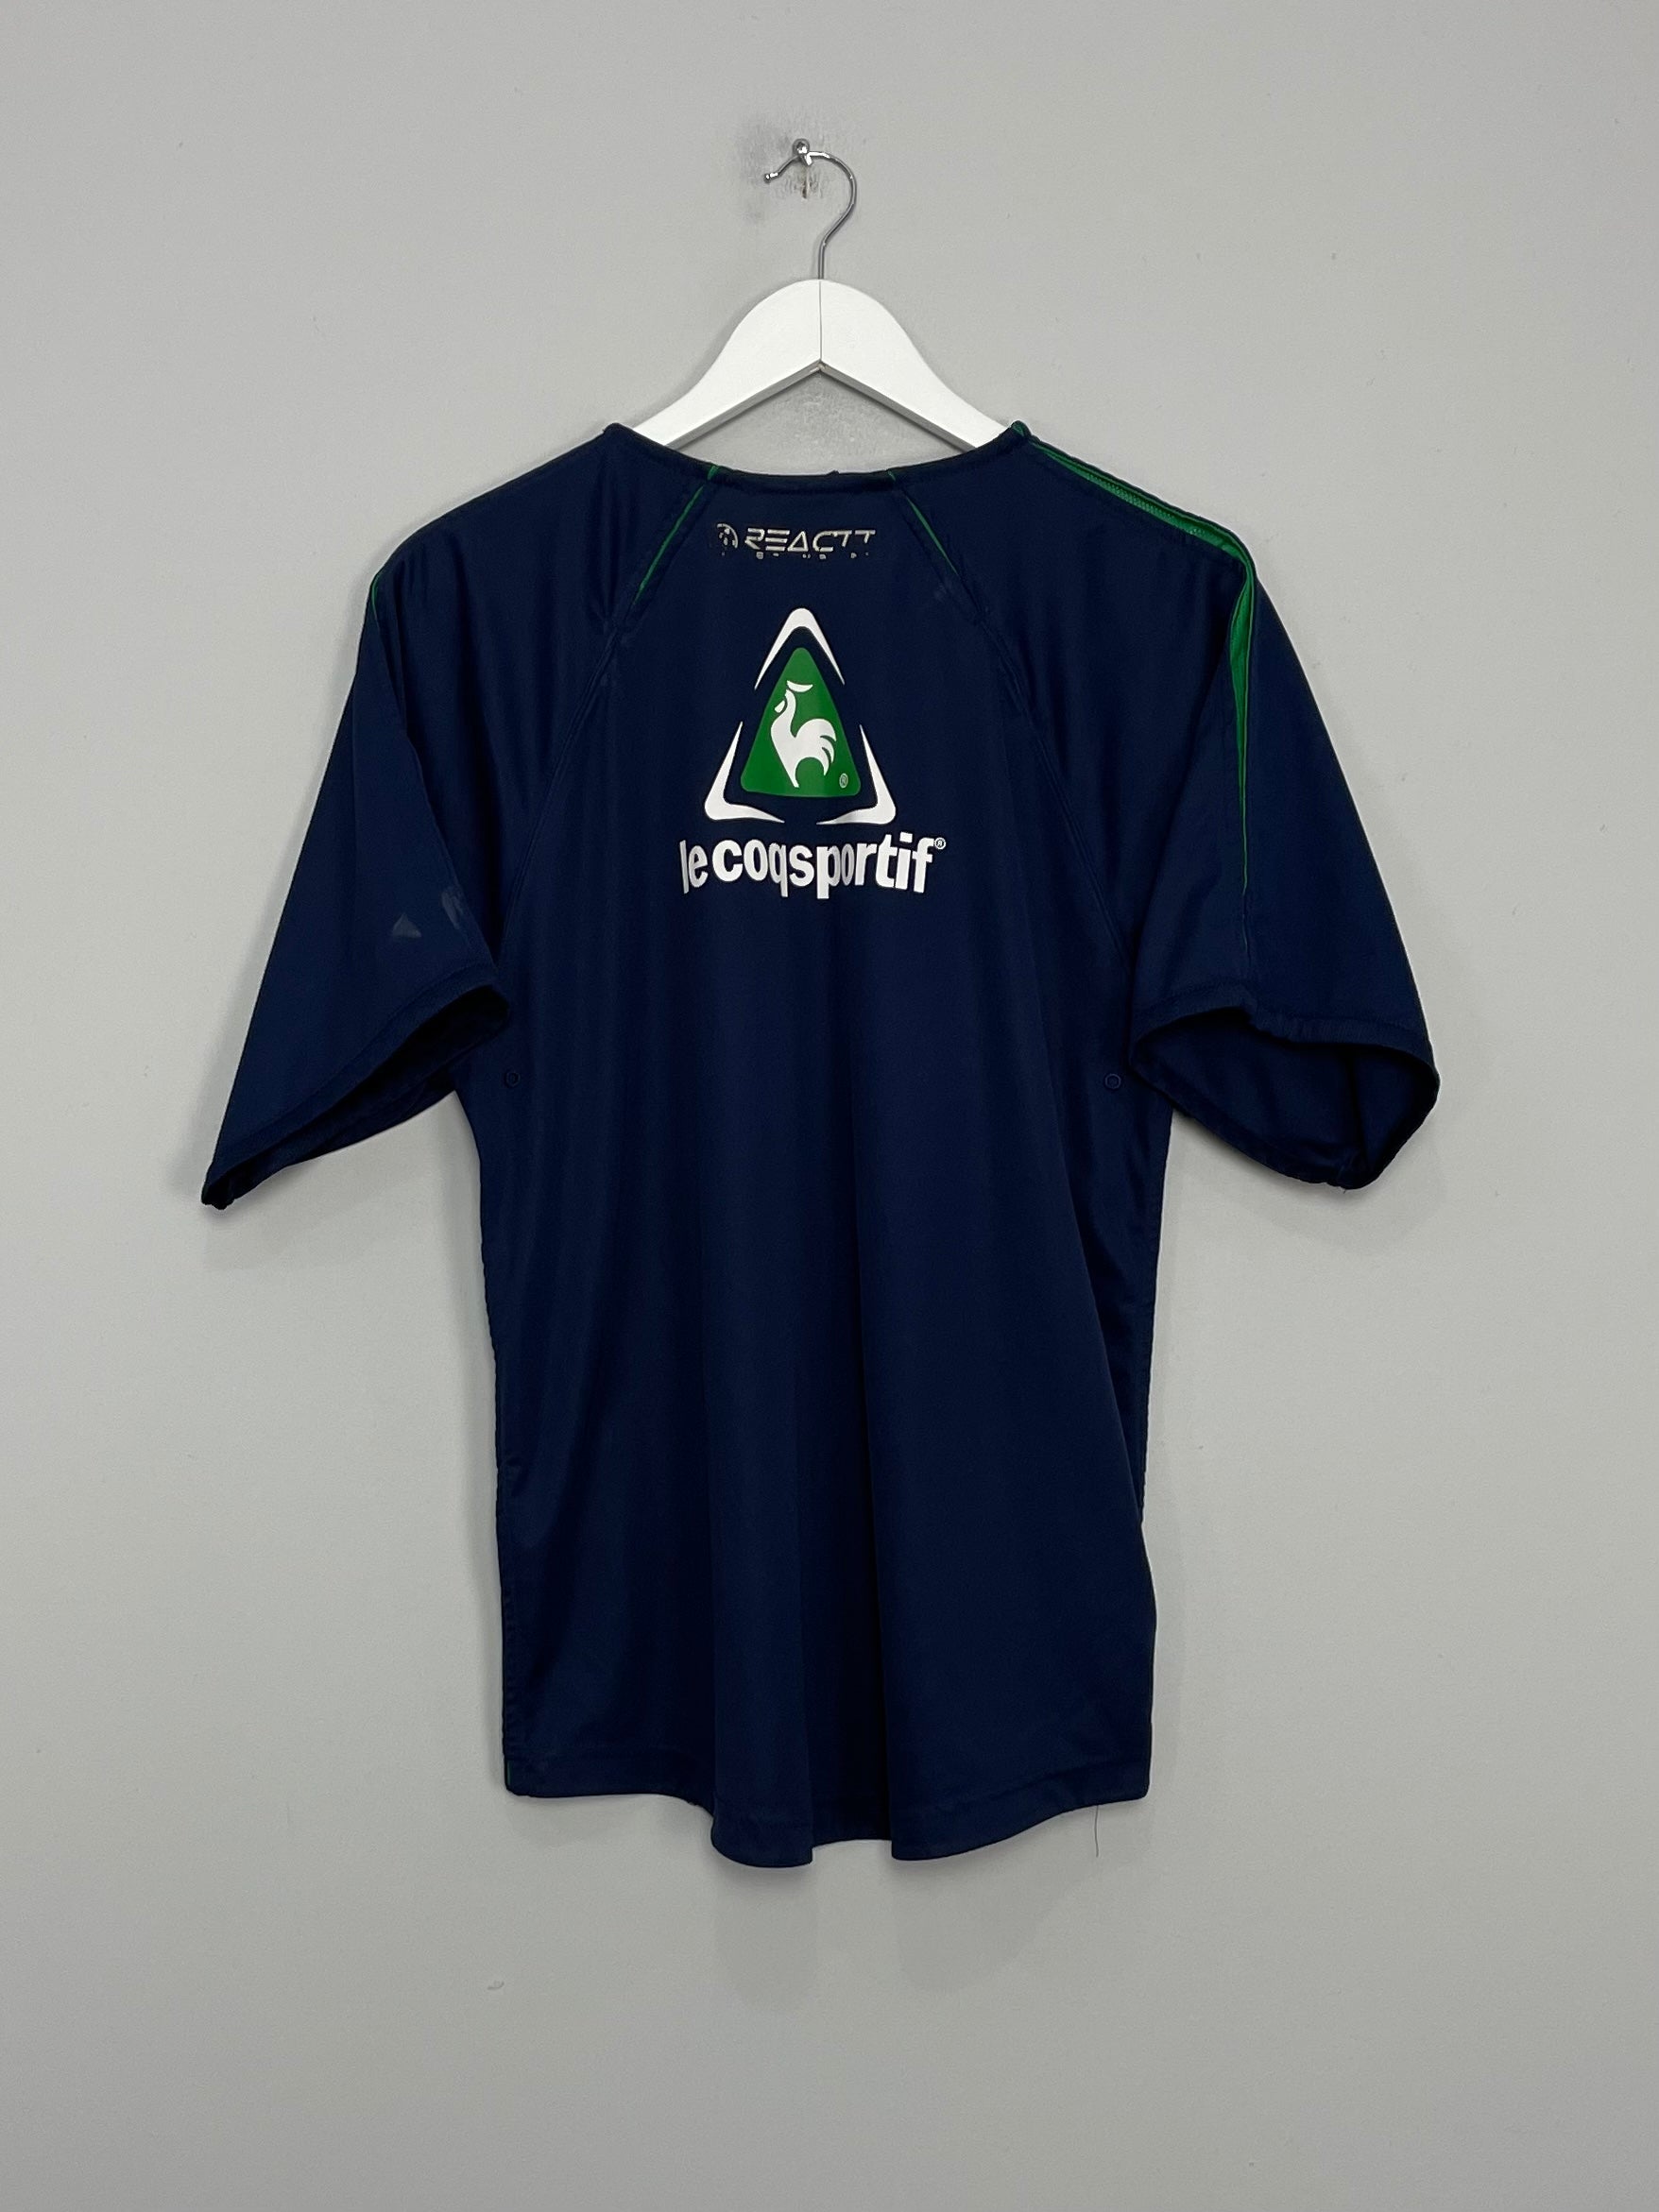 Celtic 1988 1989 umbro football shirt Soccer Jersey XS 34-36 inch